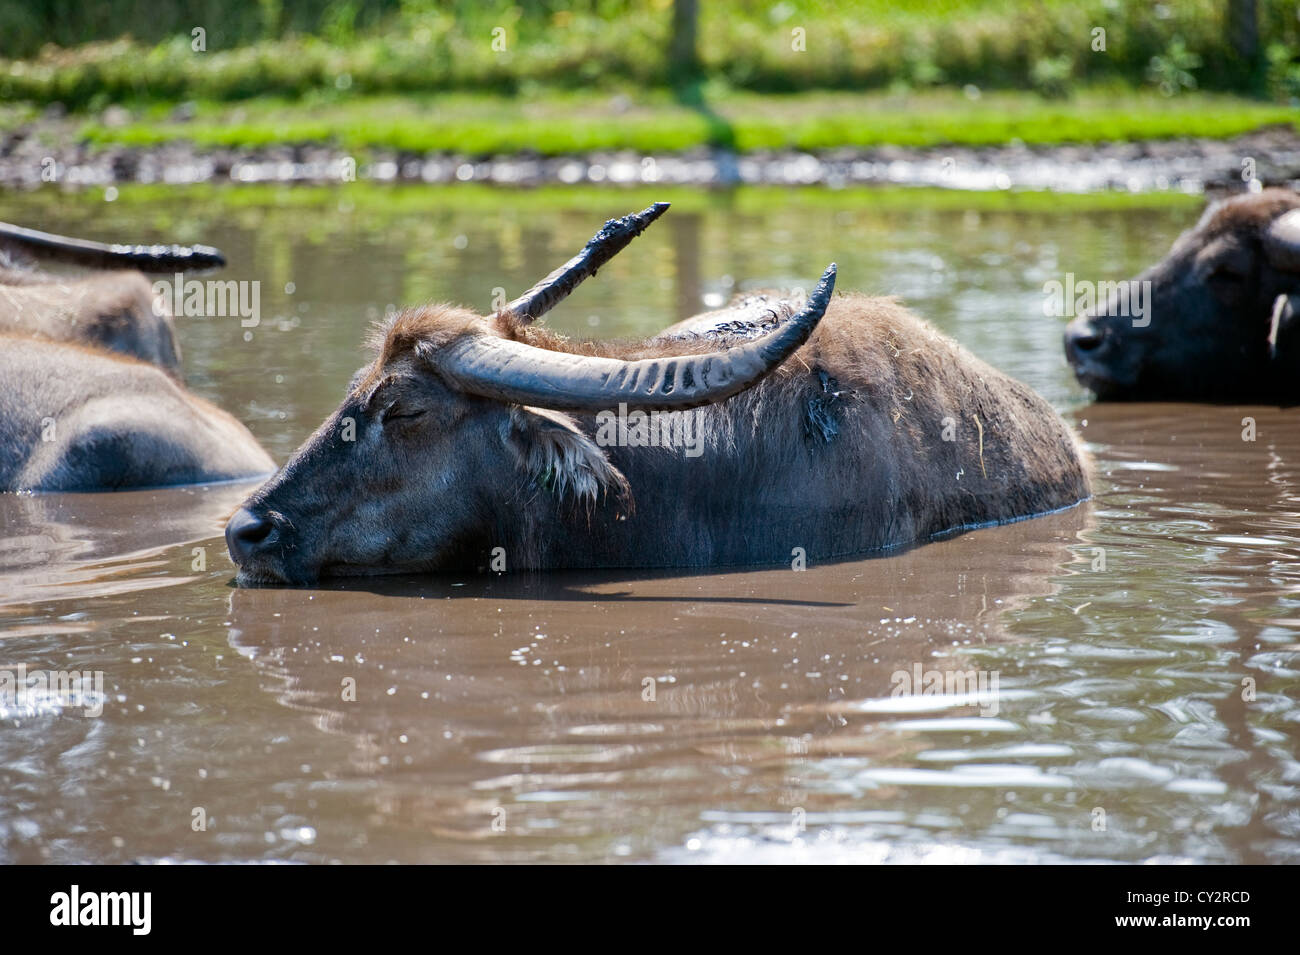 Buffalo in water Stock Photo